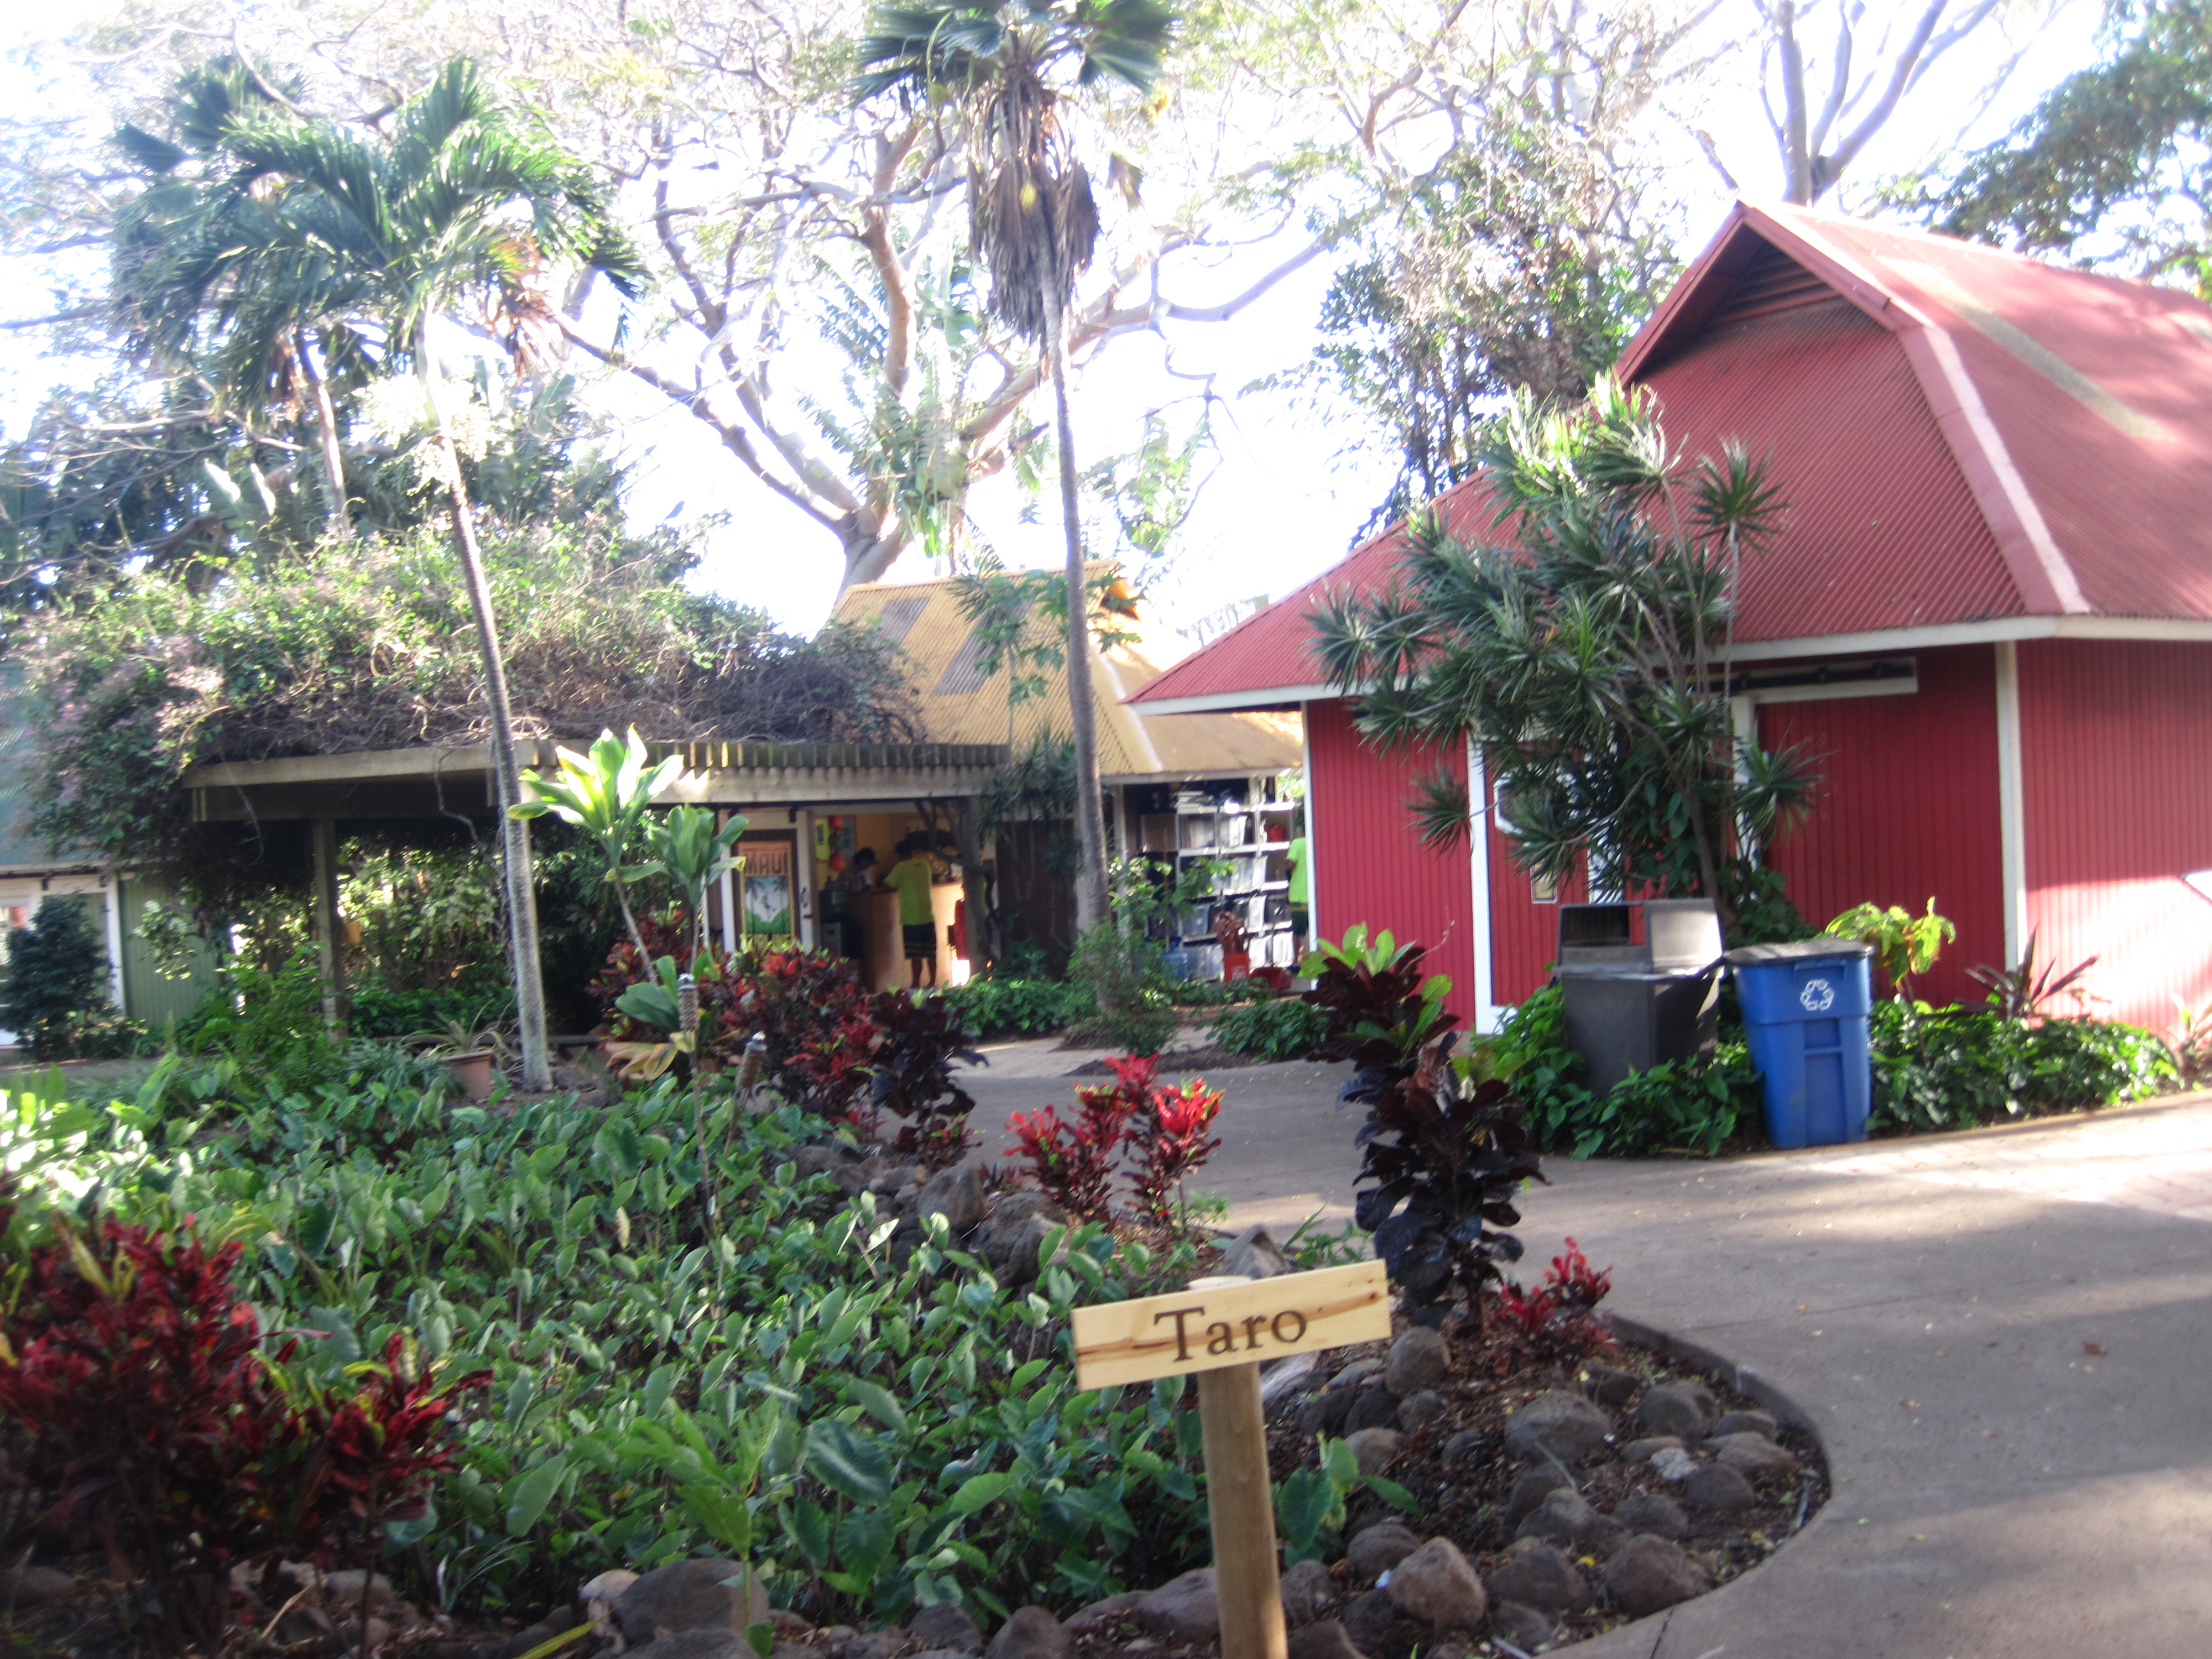 Taro plants and shops, Maui Tropical Plantation